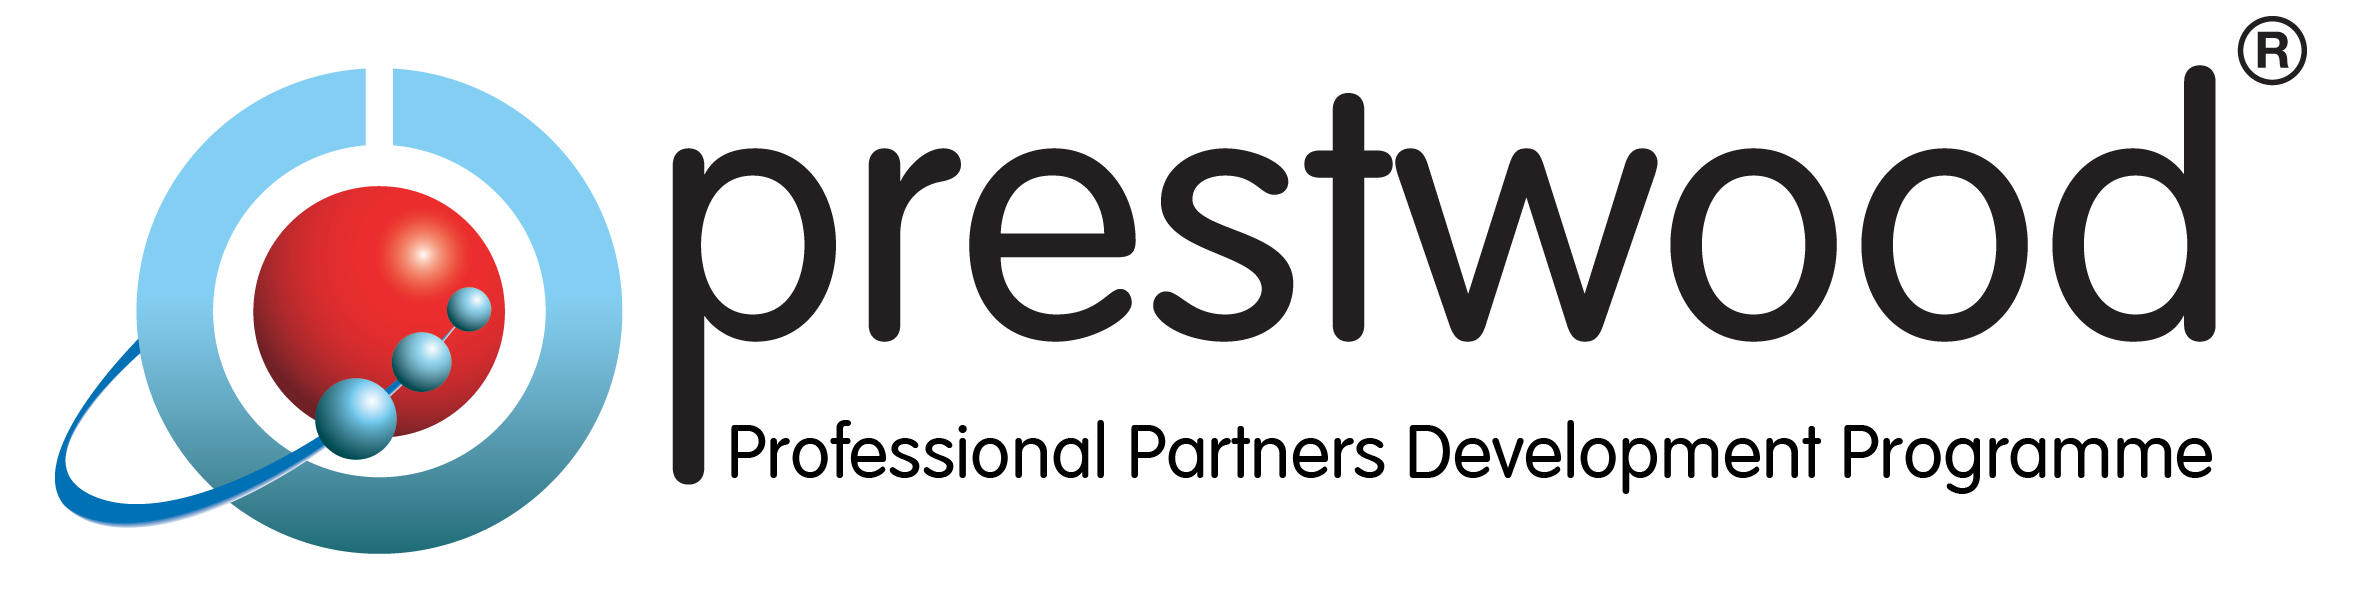 prestwood professional partners development programme logo